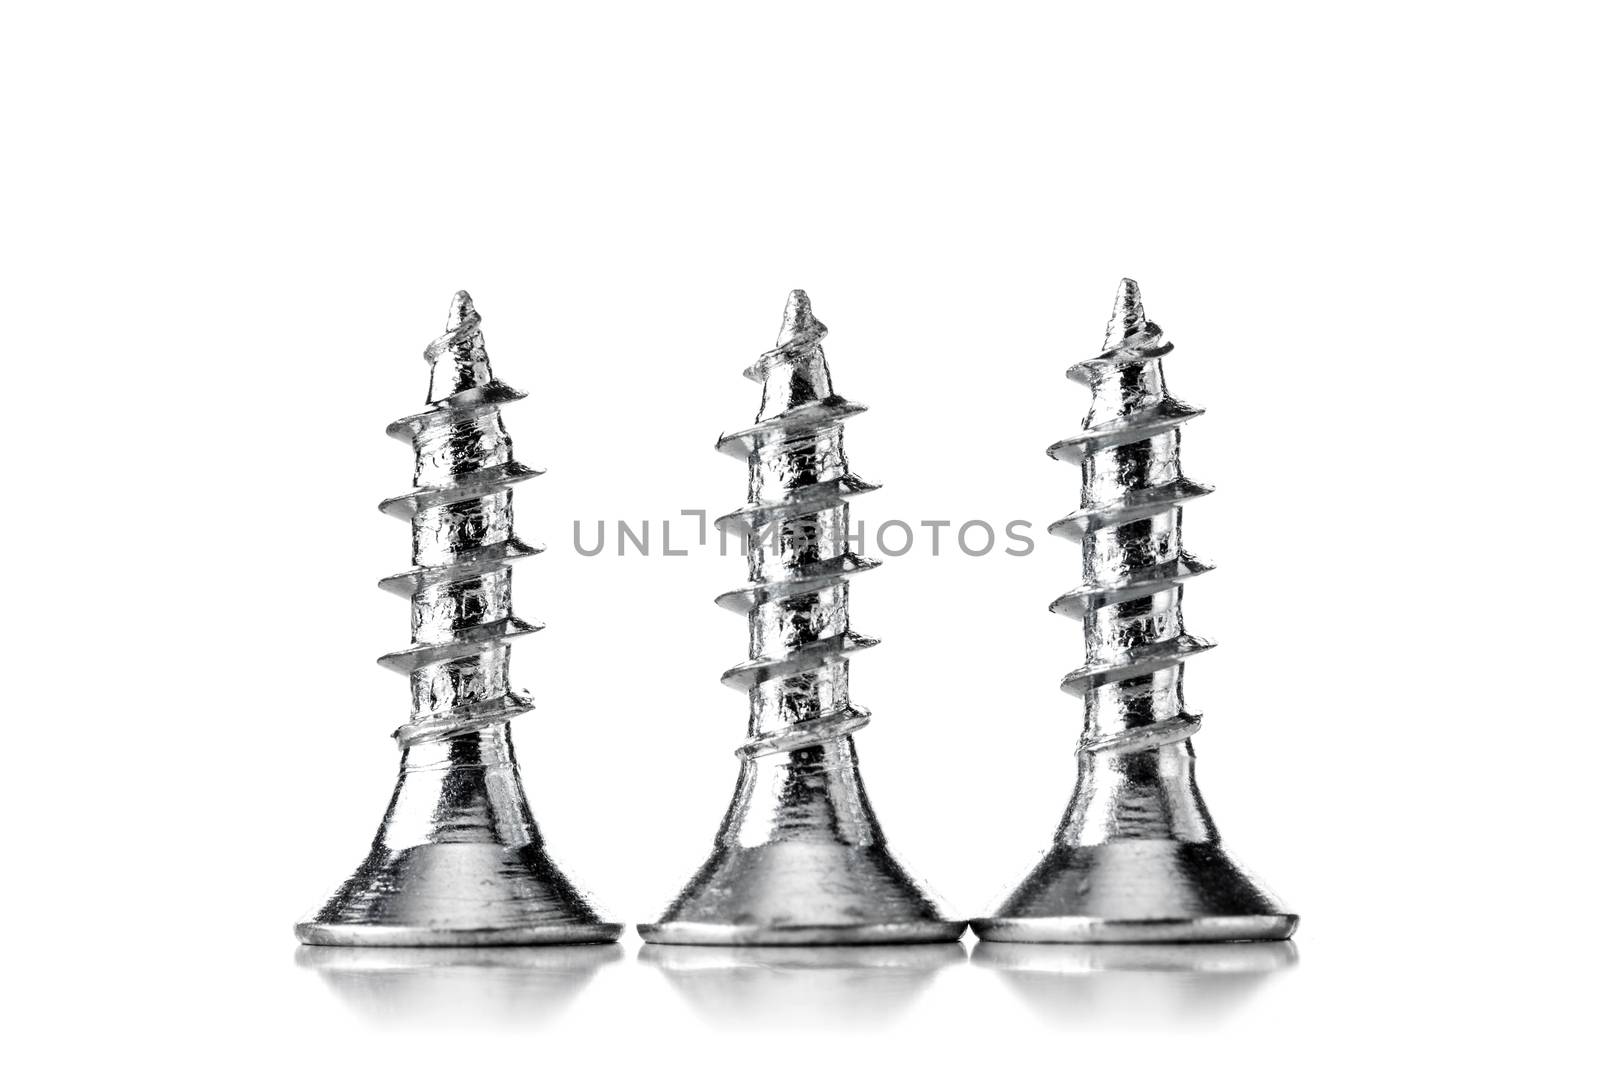 group of zinc coated screws, isolated on white